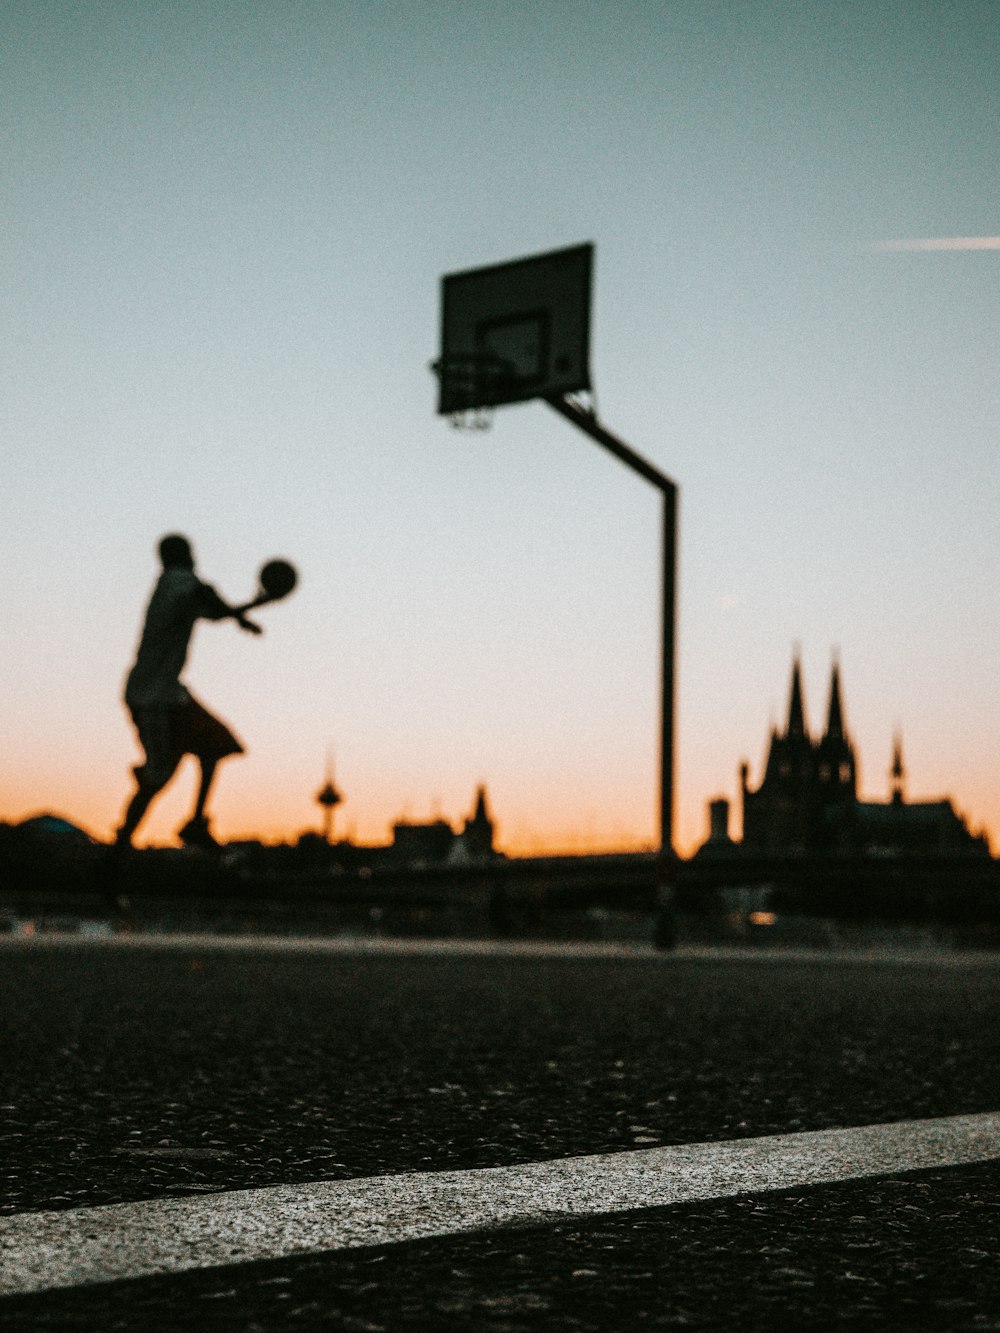 man holding ball jumping near portable basketball hoop